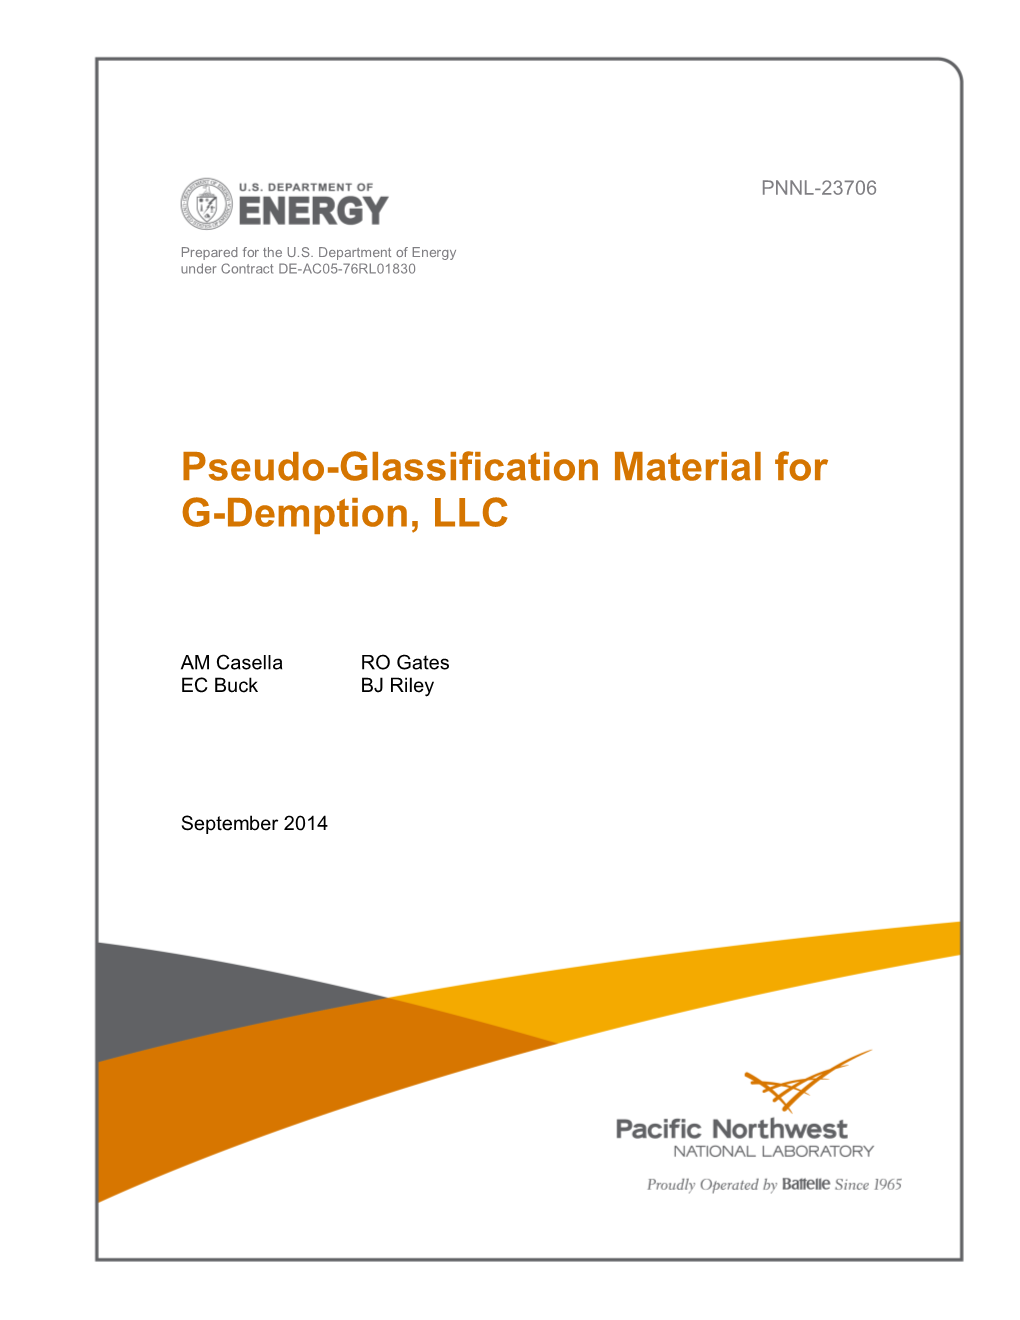 Pseudo-Glassification Material for G-Demption, LLC